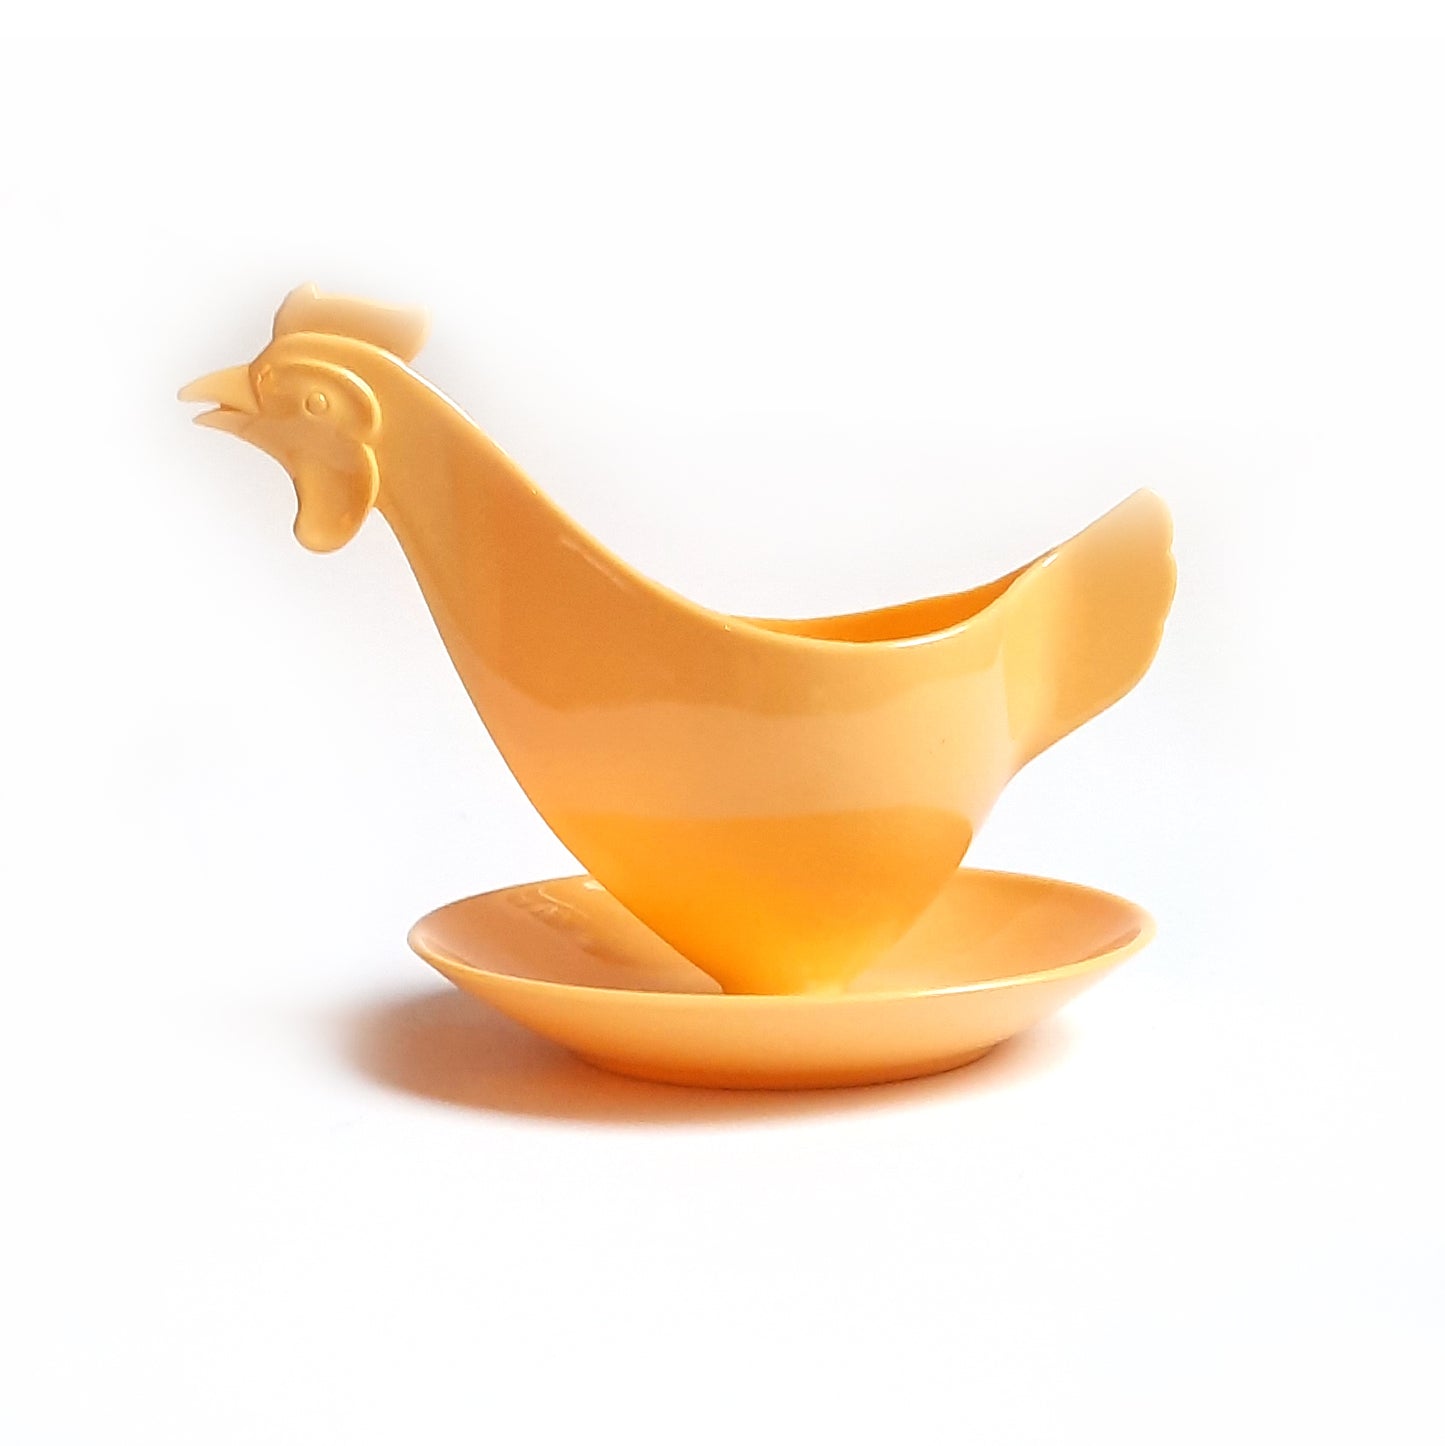 DDR egg cup chicken